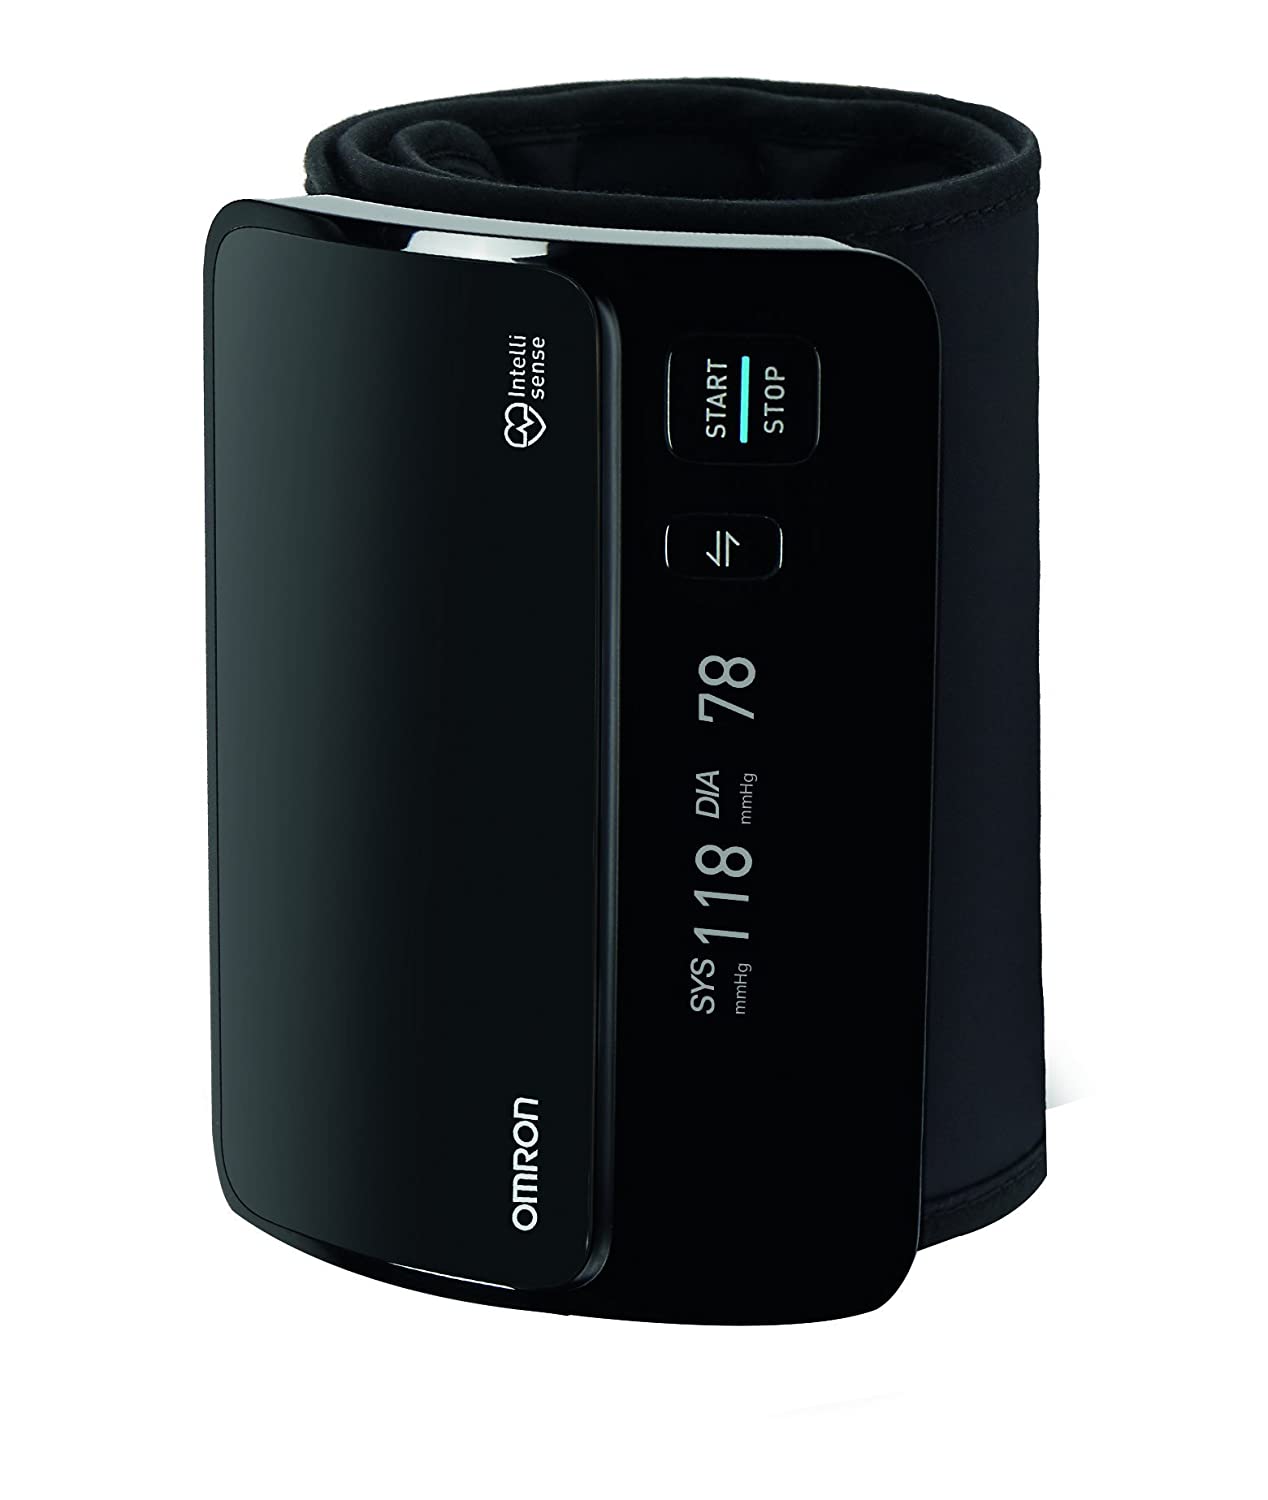 Omron Smart Elite+ HEM 7600T Blood Pressure Monitor